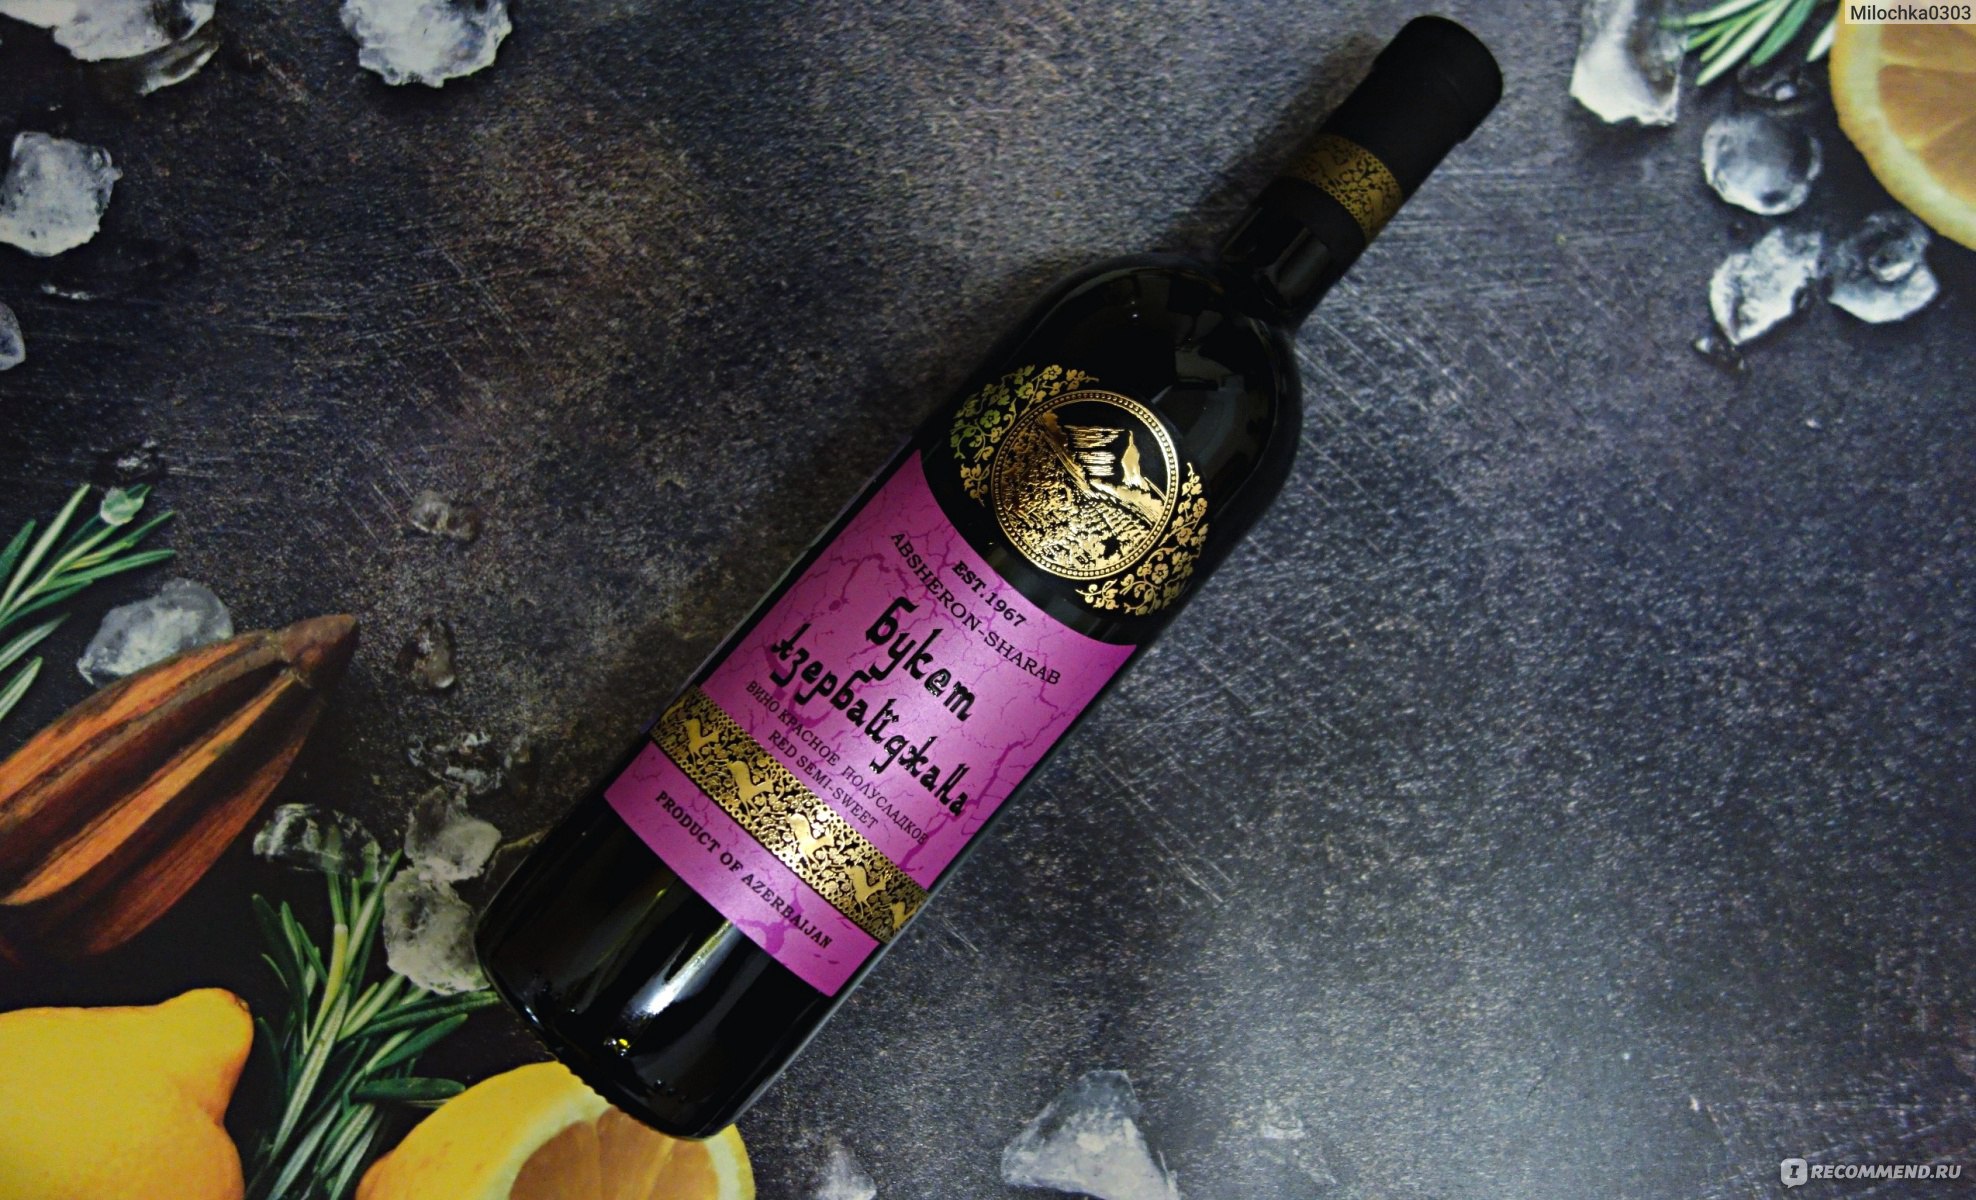 Вино красное полусладкое Absheron-Sharab Букет Азербайджана - «Когда я жарюшашлык 🐖🍖 бутылочка красного полусладкого всегда кстати 🍷»